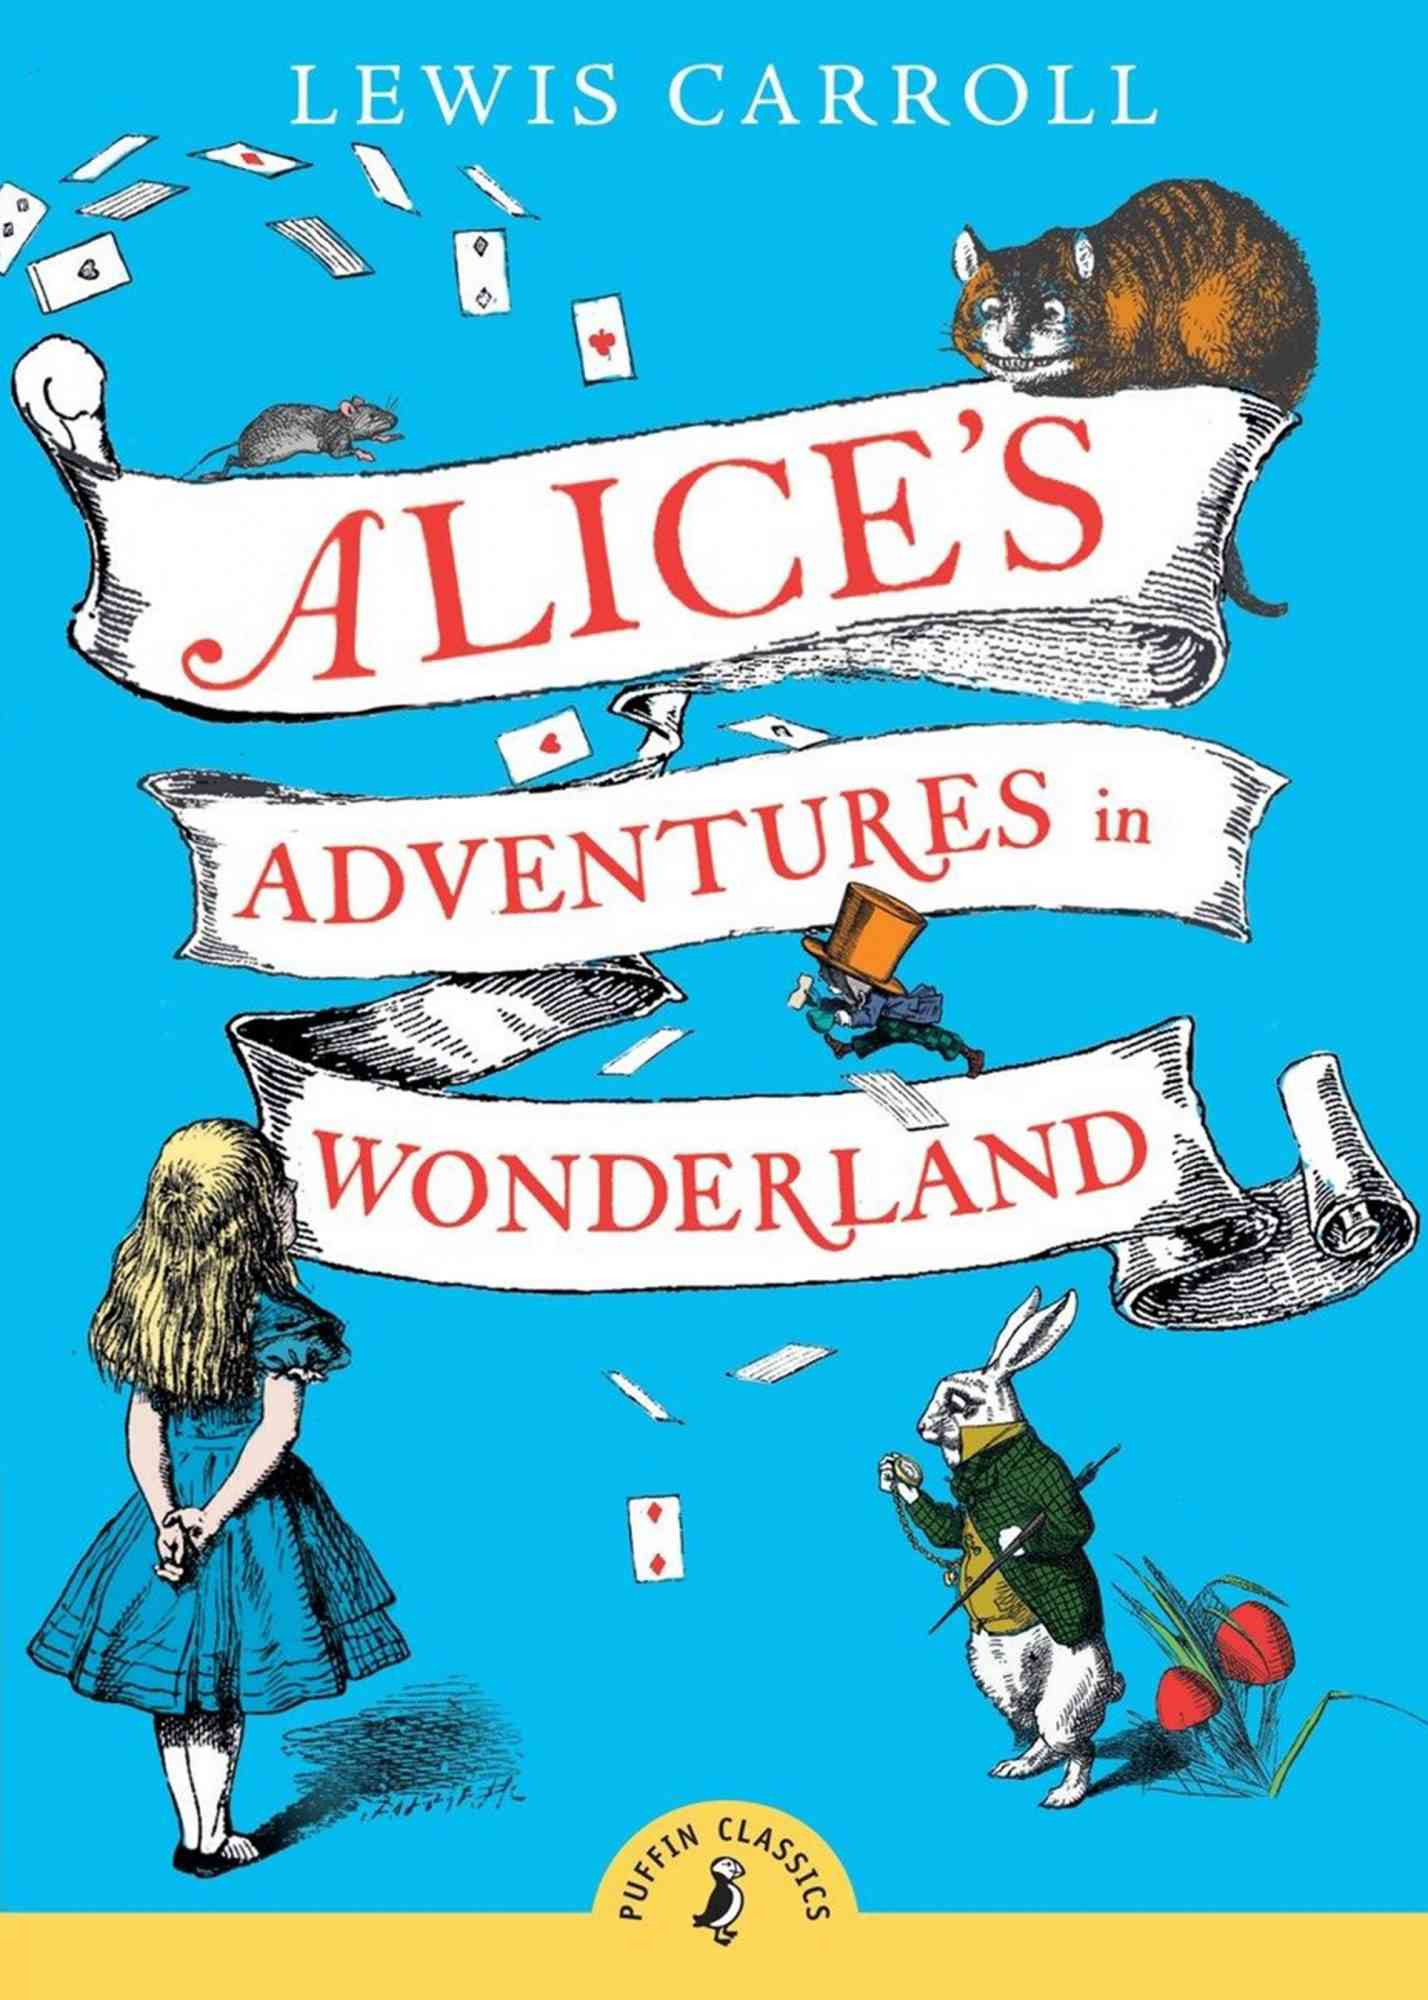 The Mad Hatter's tea party in&nbsp;Alice's Adventures in Wonderland&nbsp;(Lewis Carroll)